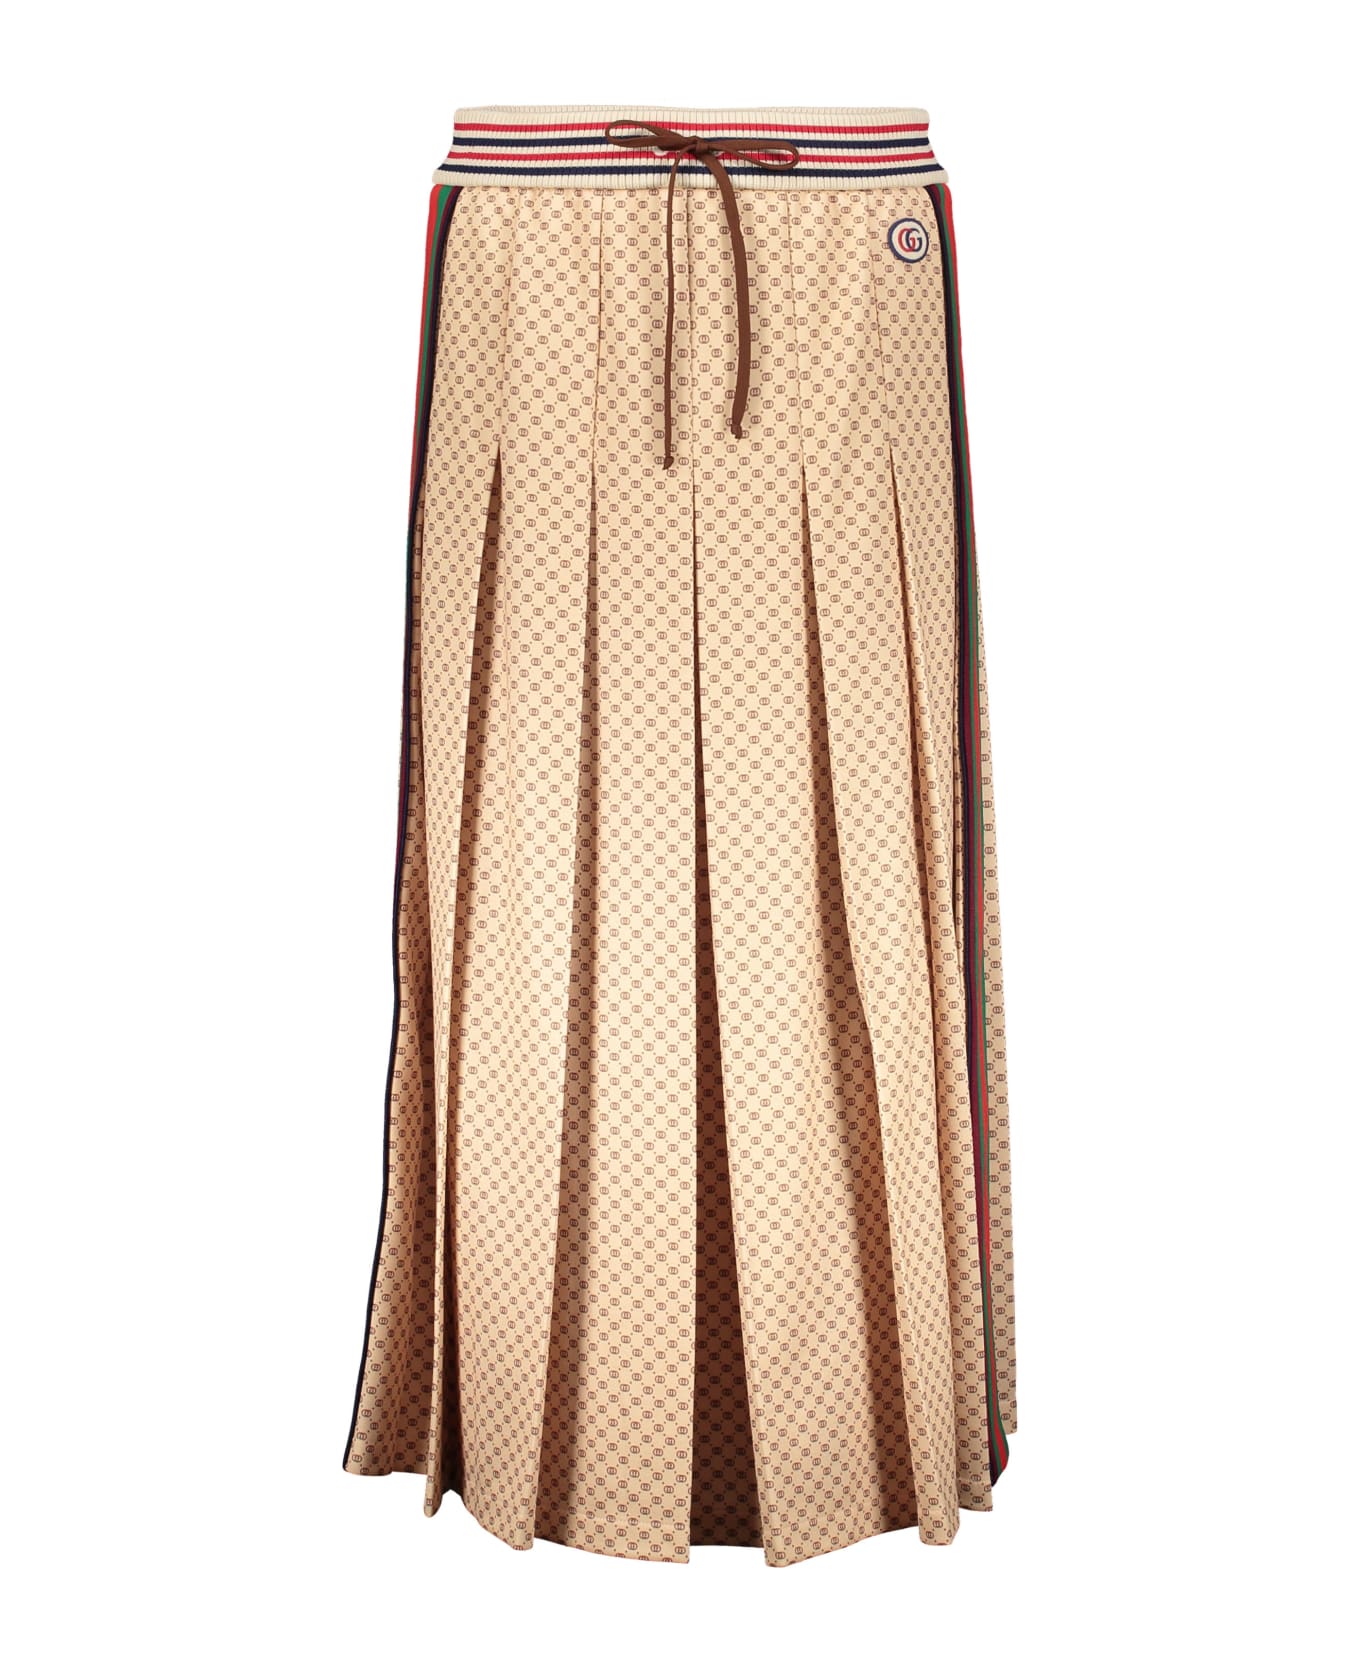 Gucci Printed Pleated Skirt - Beige